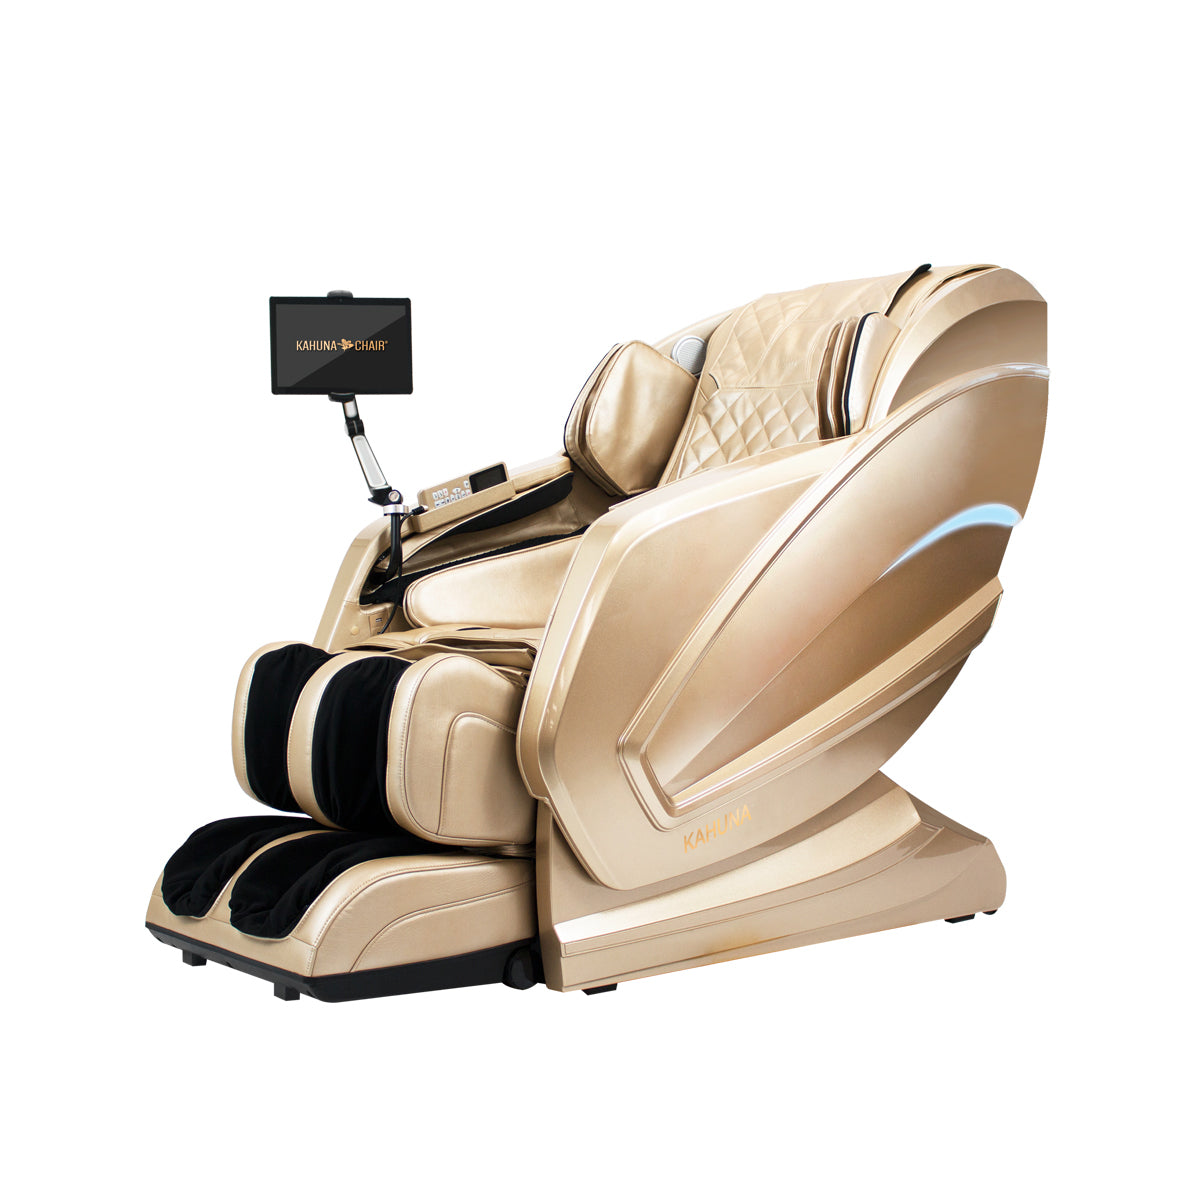 [OPEN BOX, A] 4D Exquisite Rhythmic HSL-Track Kahuna Massage Chair, HM-Kappa Gold